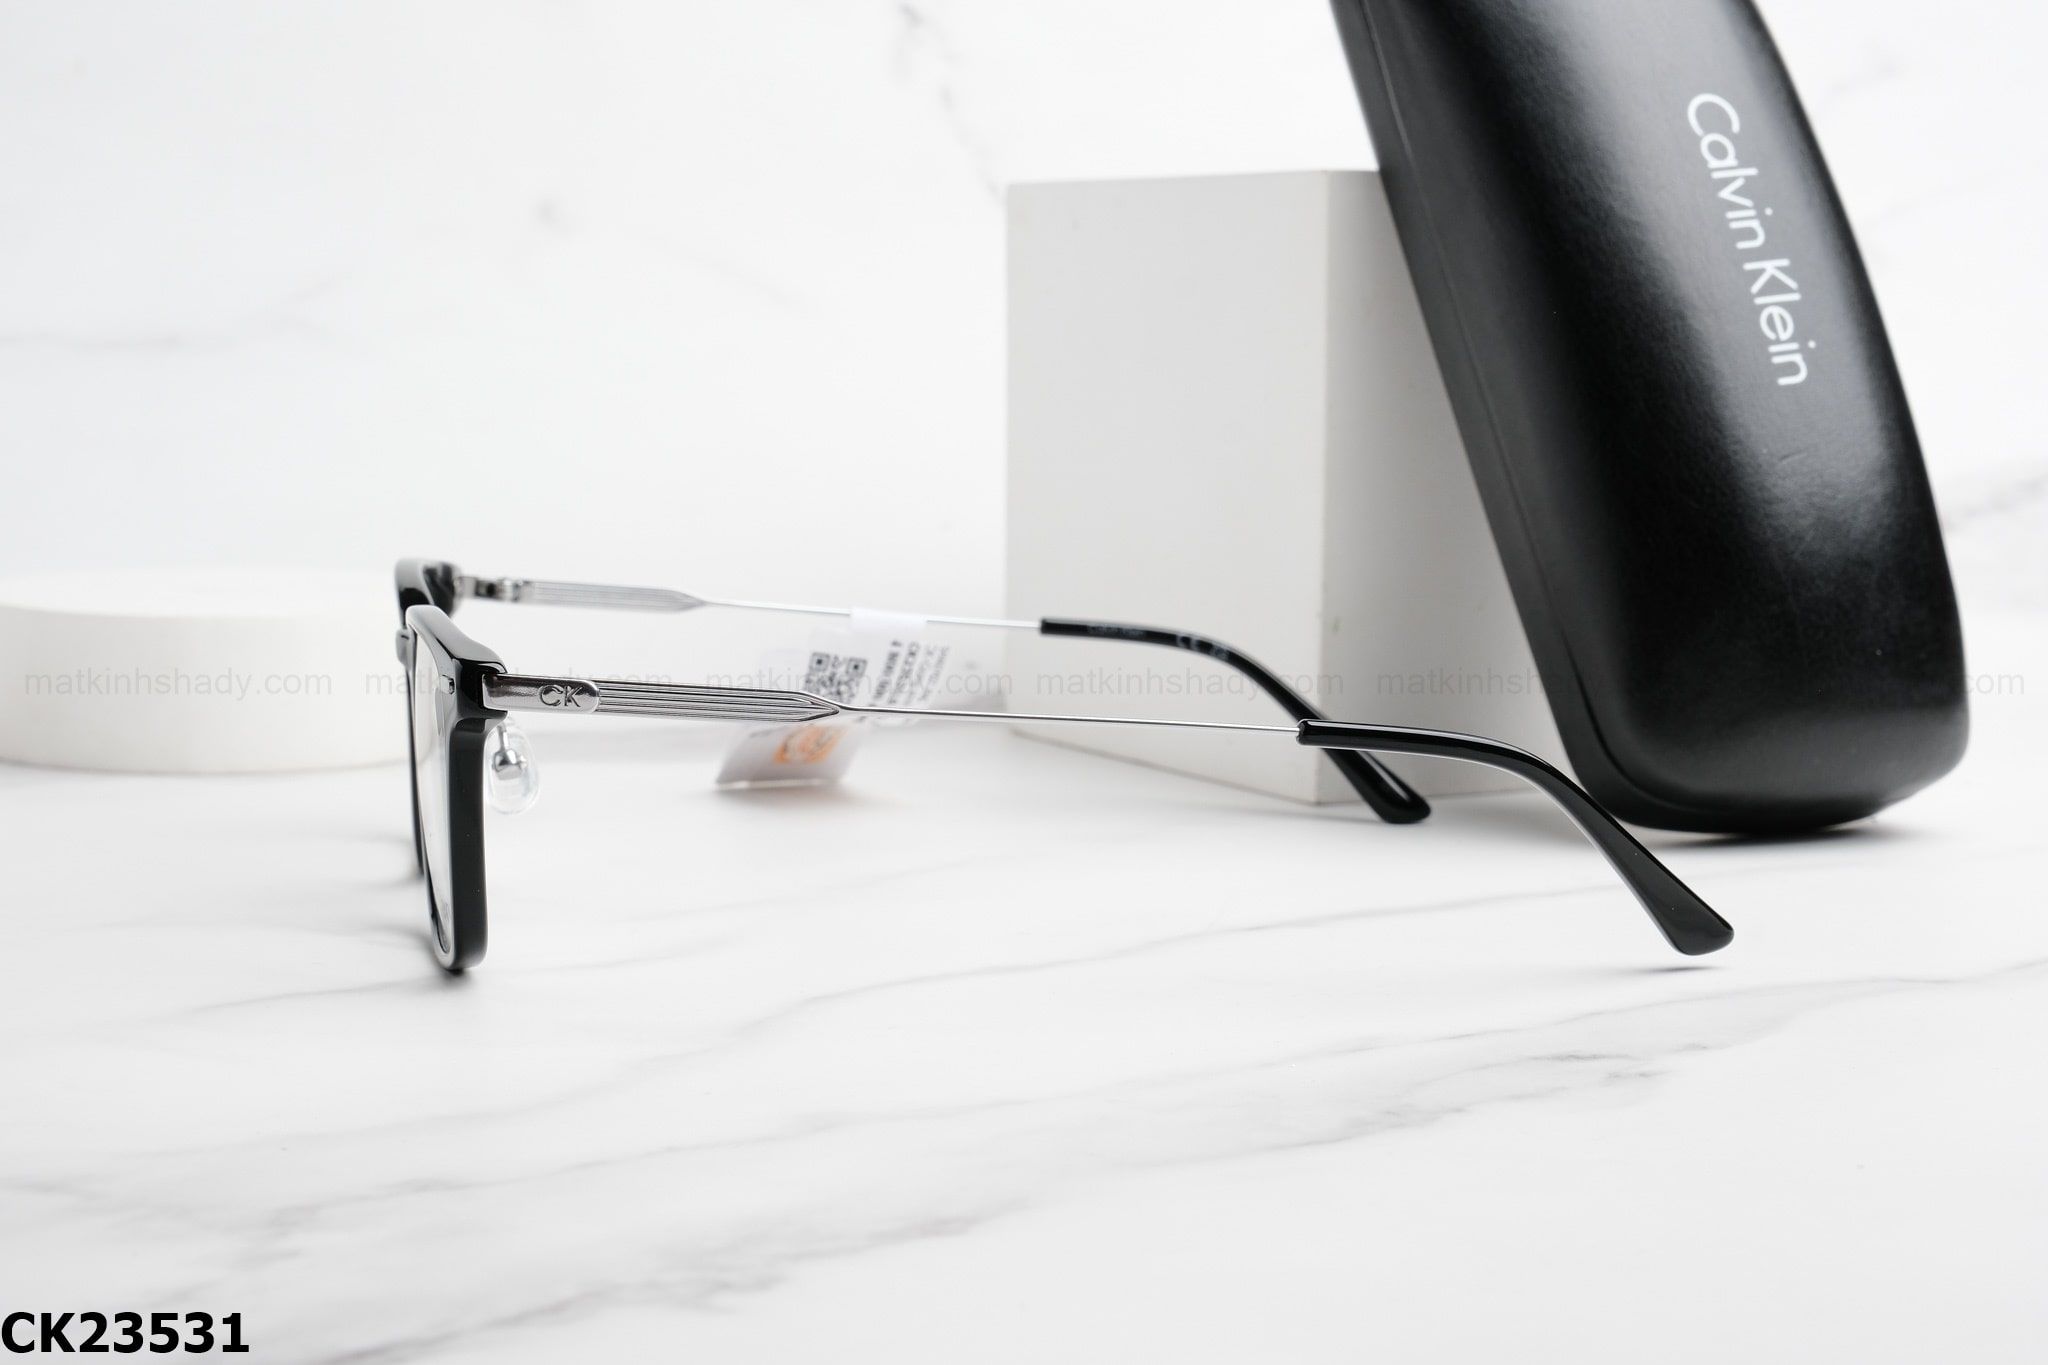  Calvin Klein Eyewear - Glasses - CK23531 